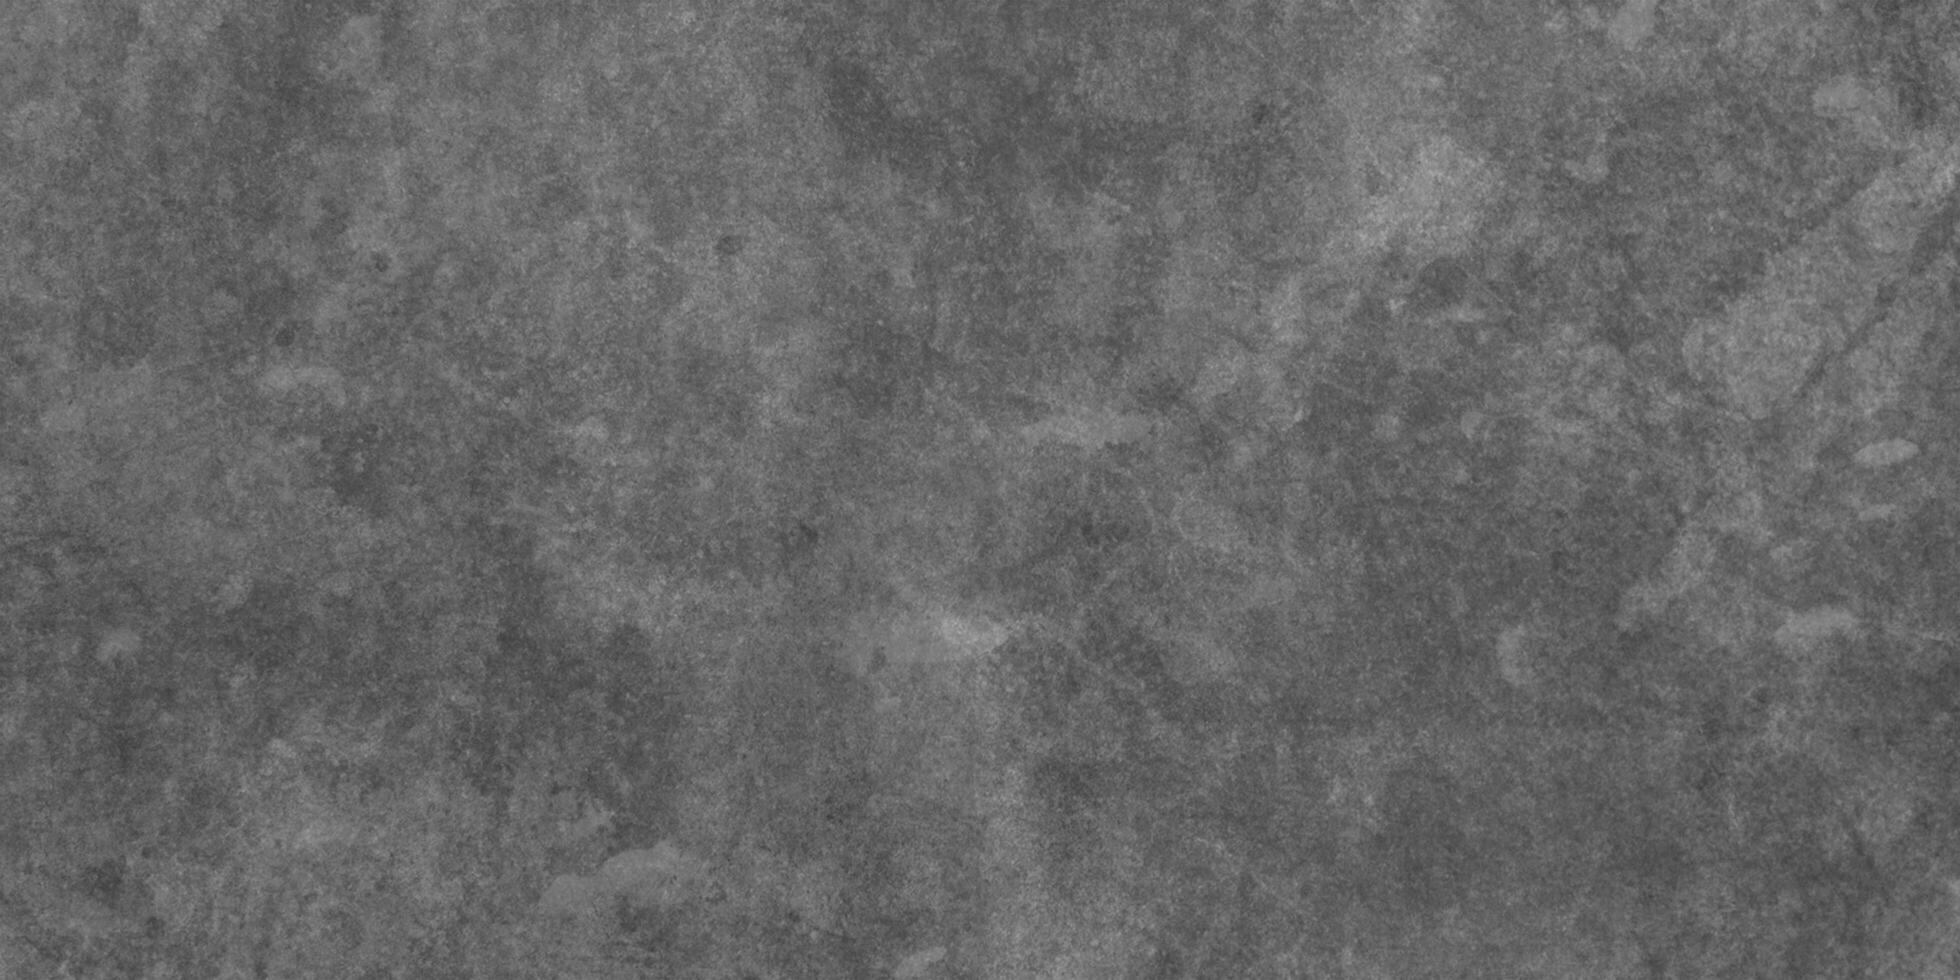 dark black grunge textured blackboard or chalkboard, monochrome slate grunge concrete wall or plaster, distressed overlay concrete asphalt texture, grainy old distressed grunge background in black. photo